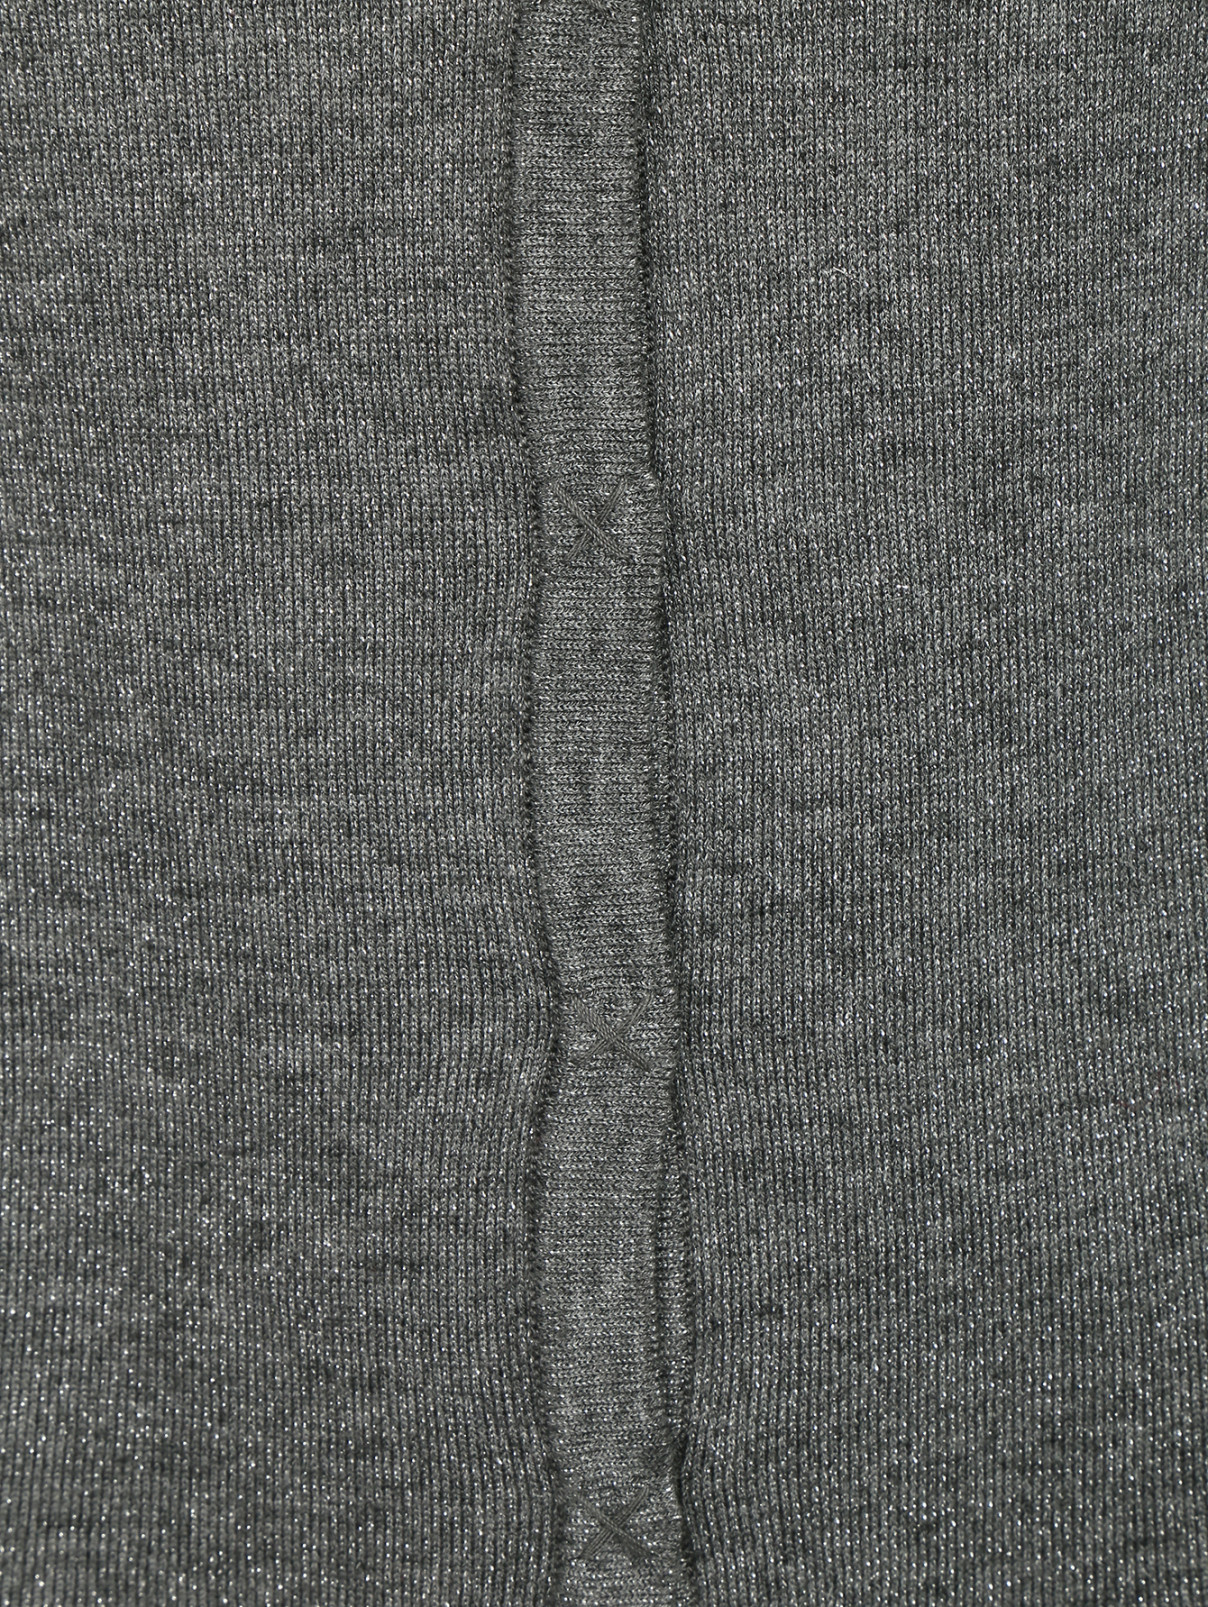 Кардиган мелкой вязки с декором на вороте MiMiSol  –  Деталь  – Цвет:  Серый